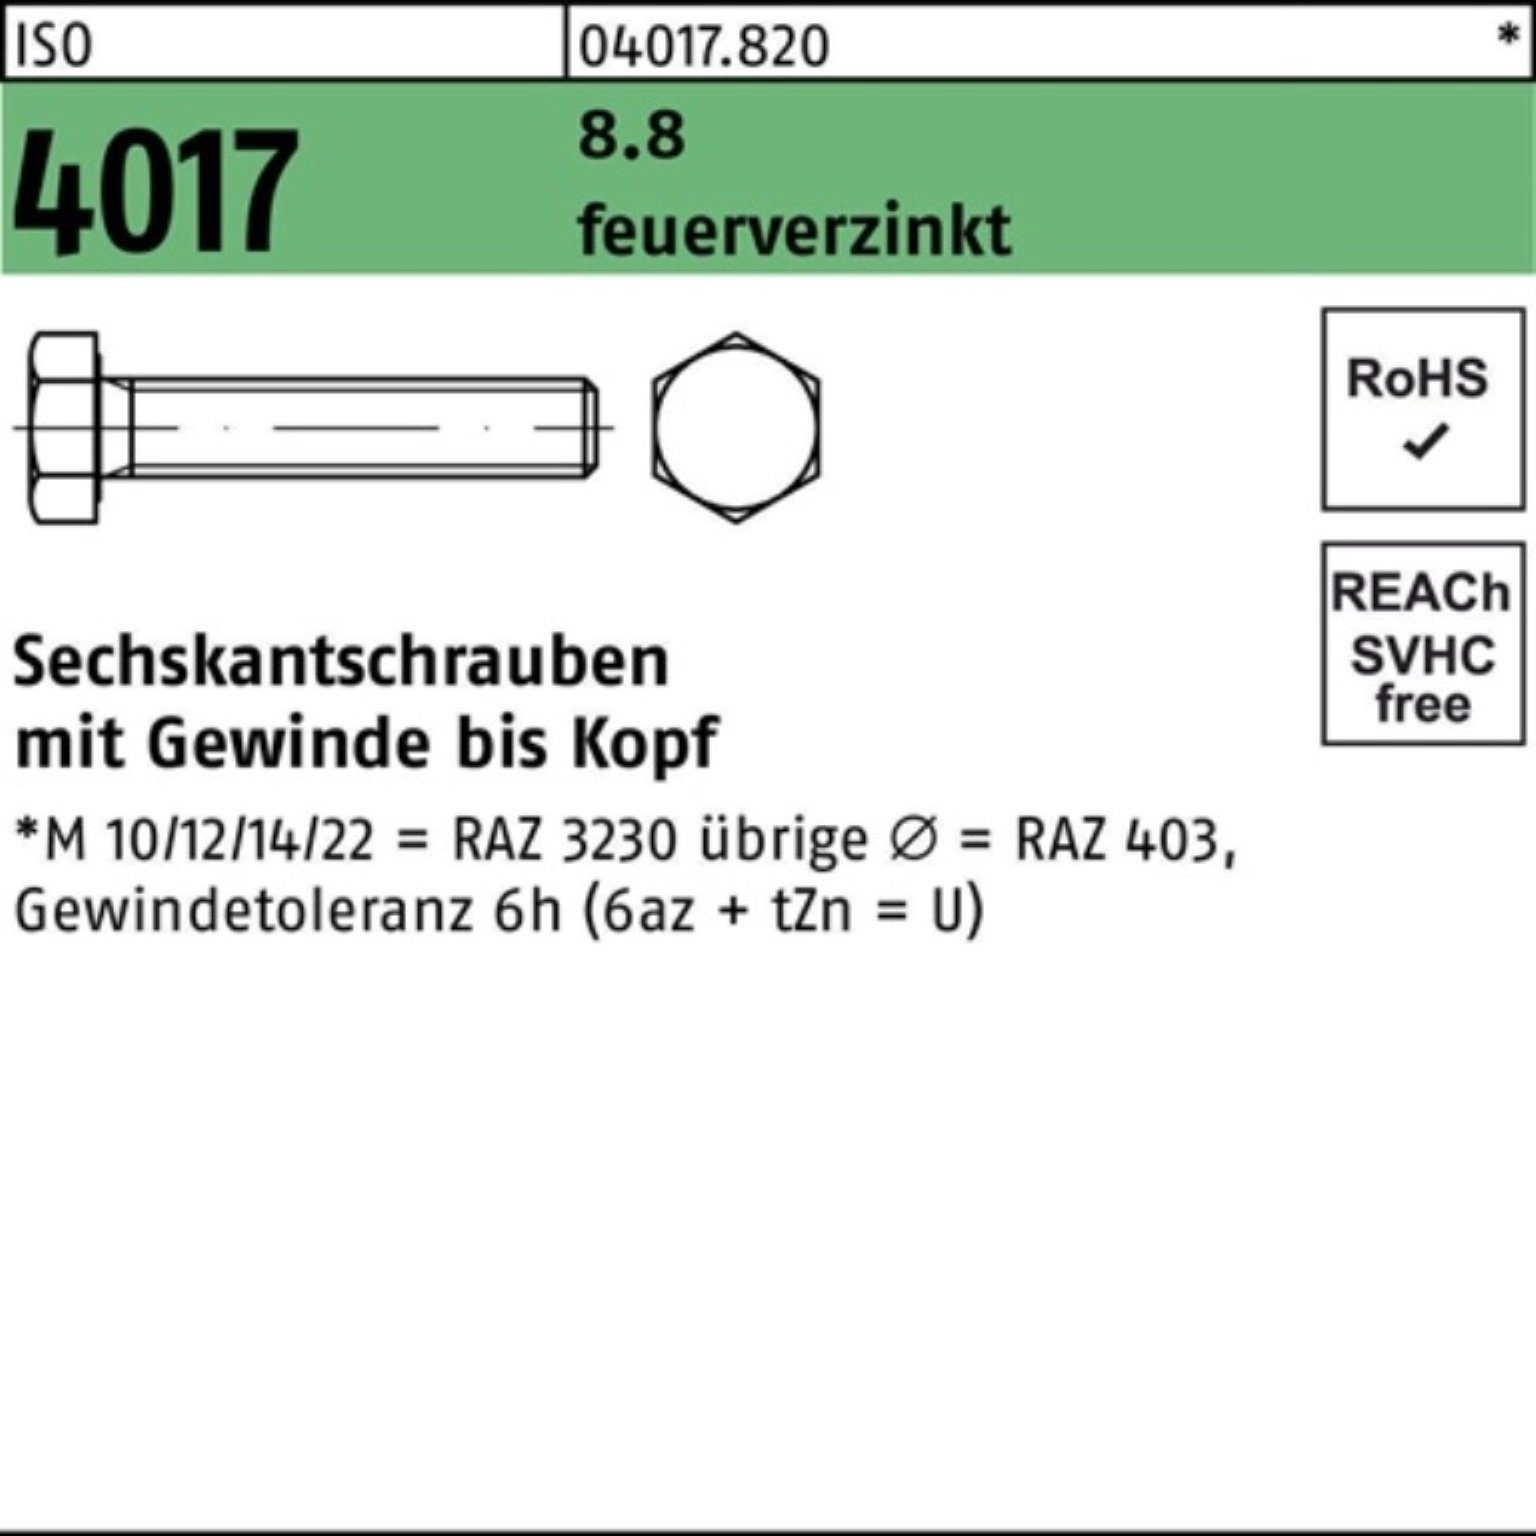 Bufab Sechskantschraube M30x 100er ISO 70 Sechskantschraube 1 VG Pack 4017 8.8 Stü feuerverz